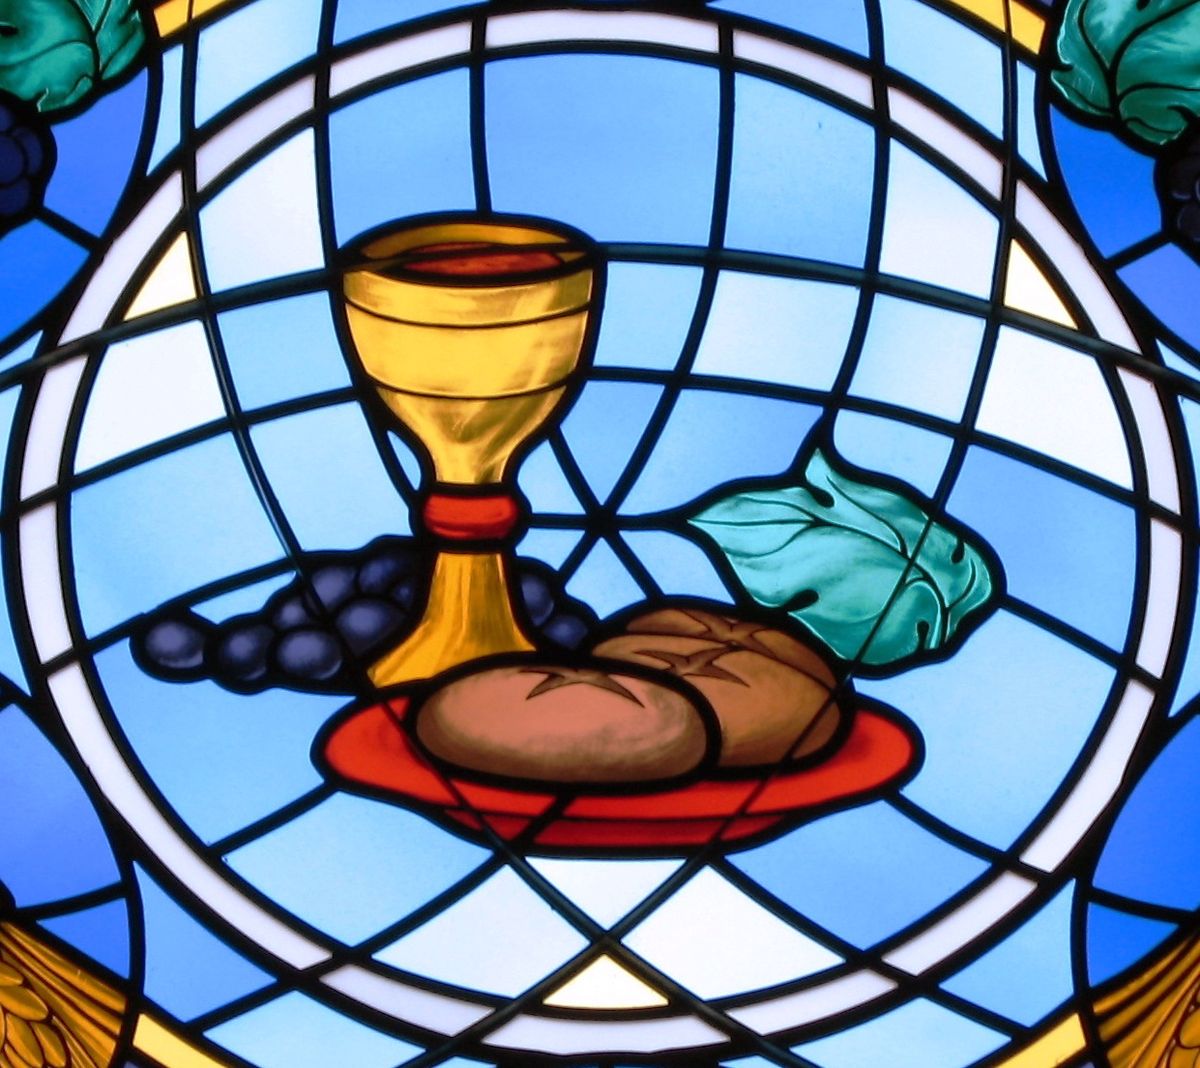 chalice clipart liturgy the hour